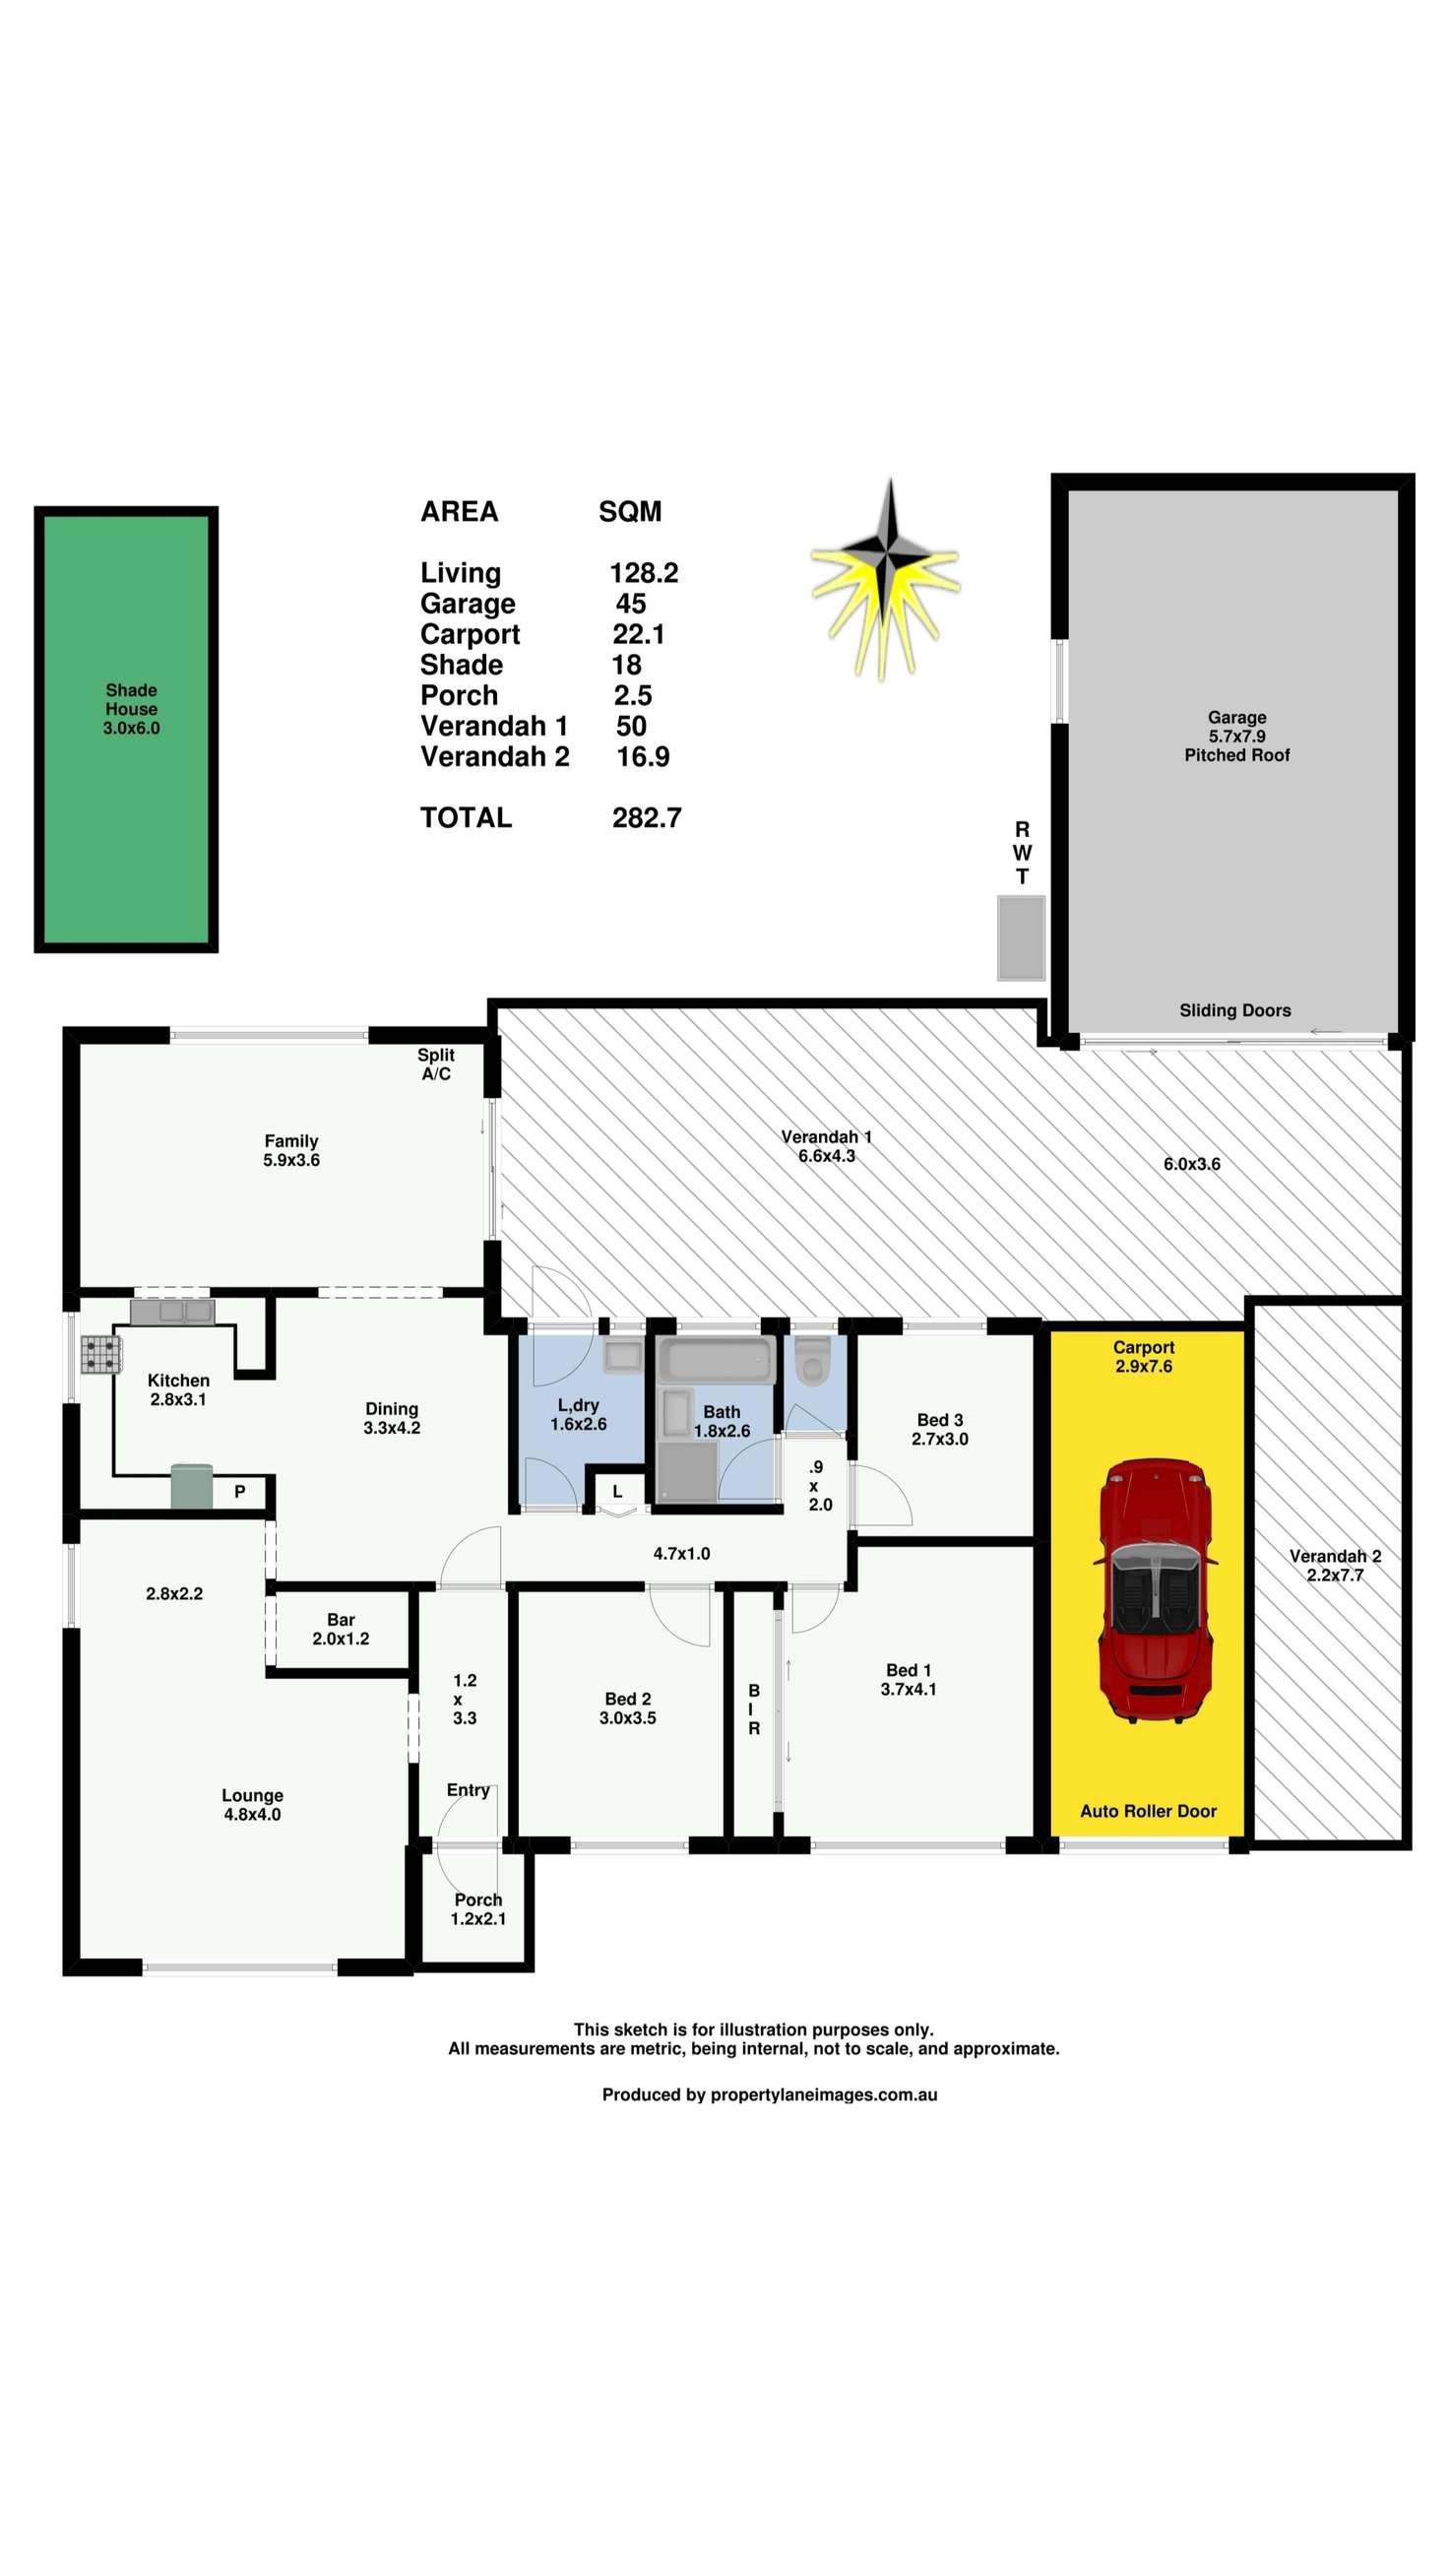 Floorplan of Homely house listing, 11 Wanbi Court, Craigmore SA 5114